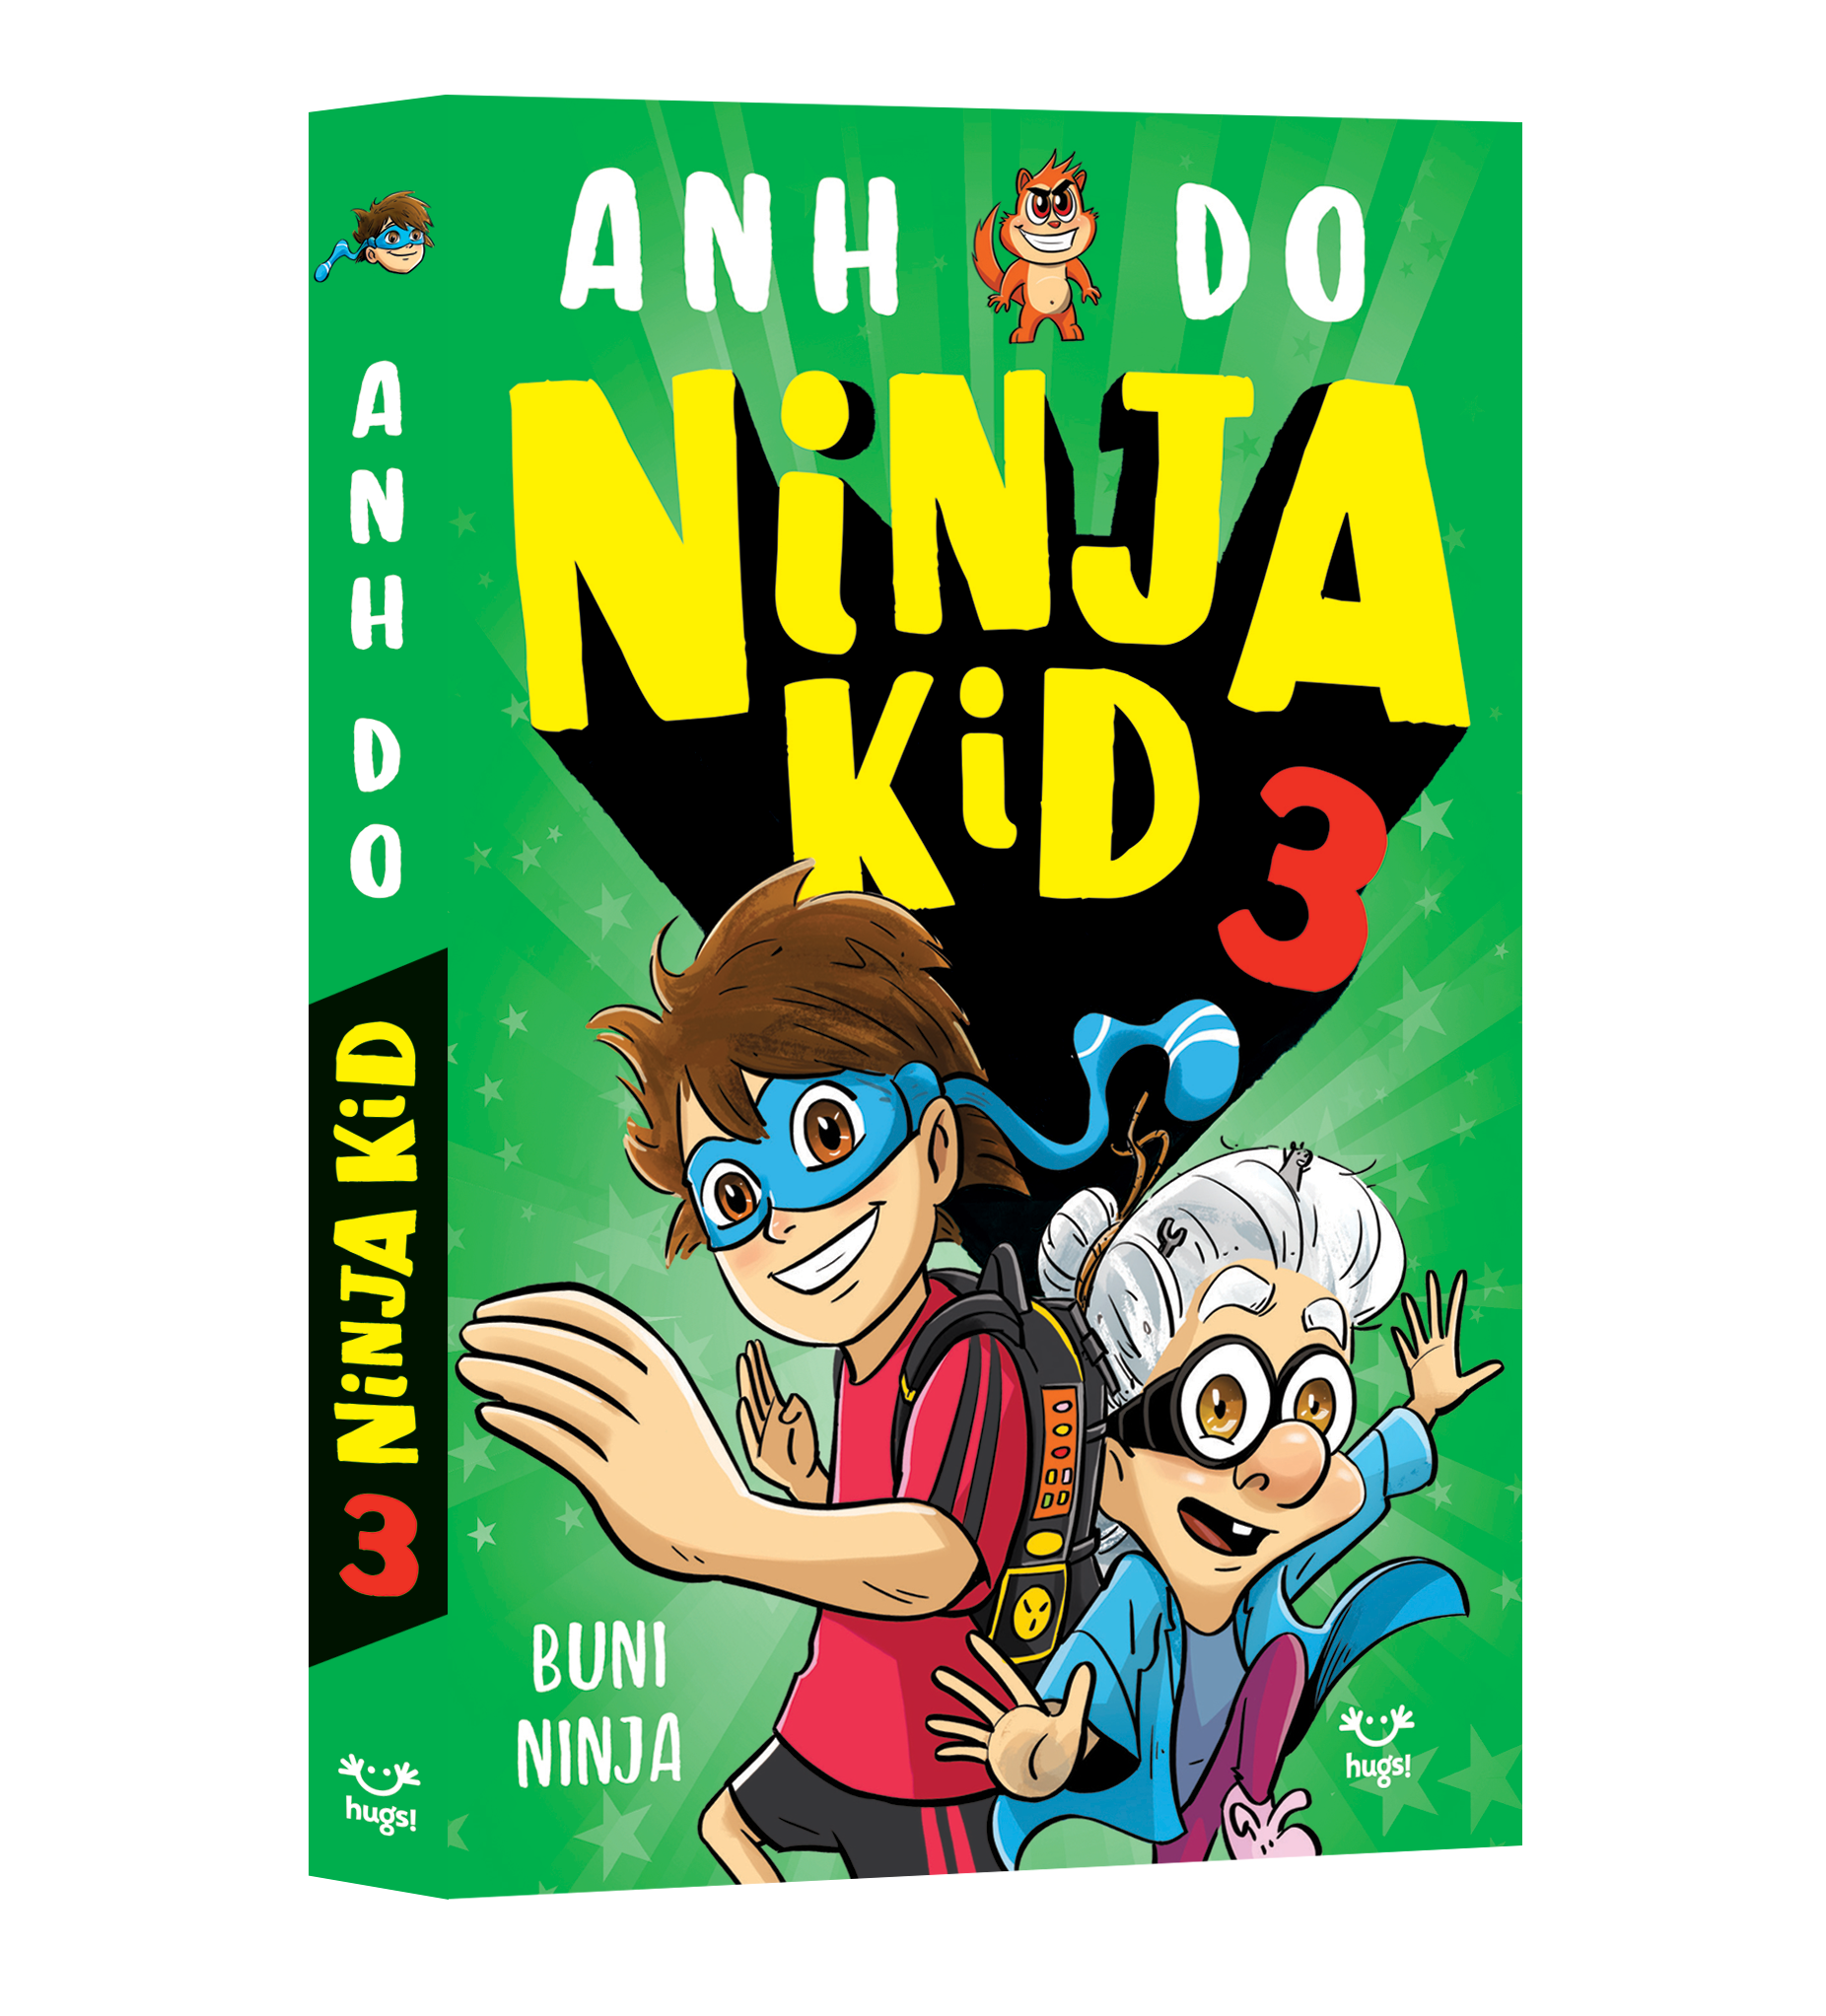 Ninja Kid 3 Buni Ninja